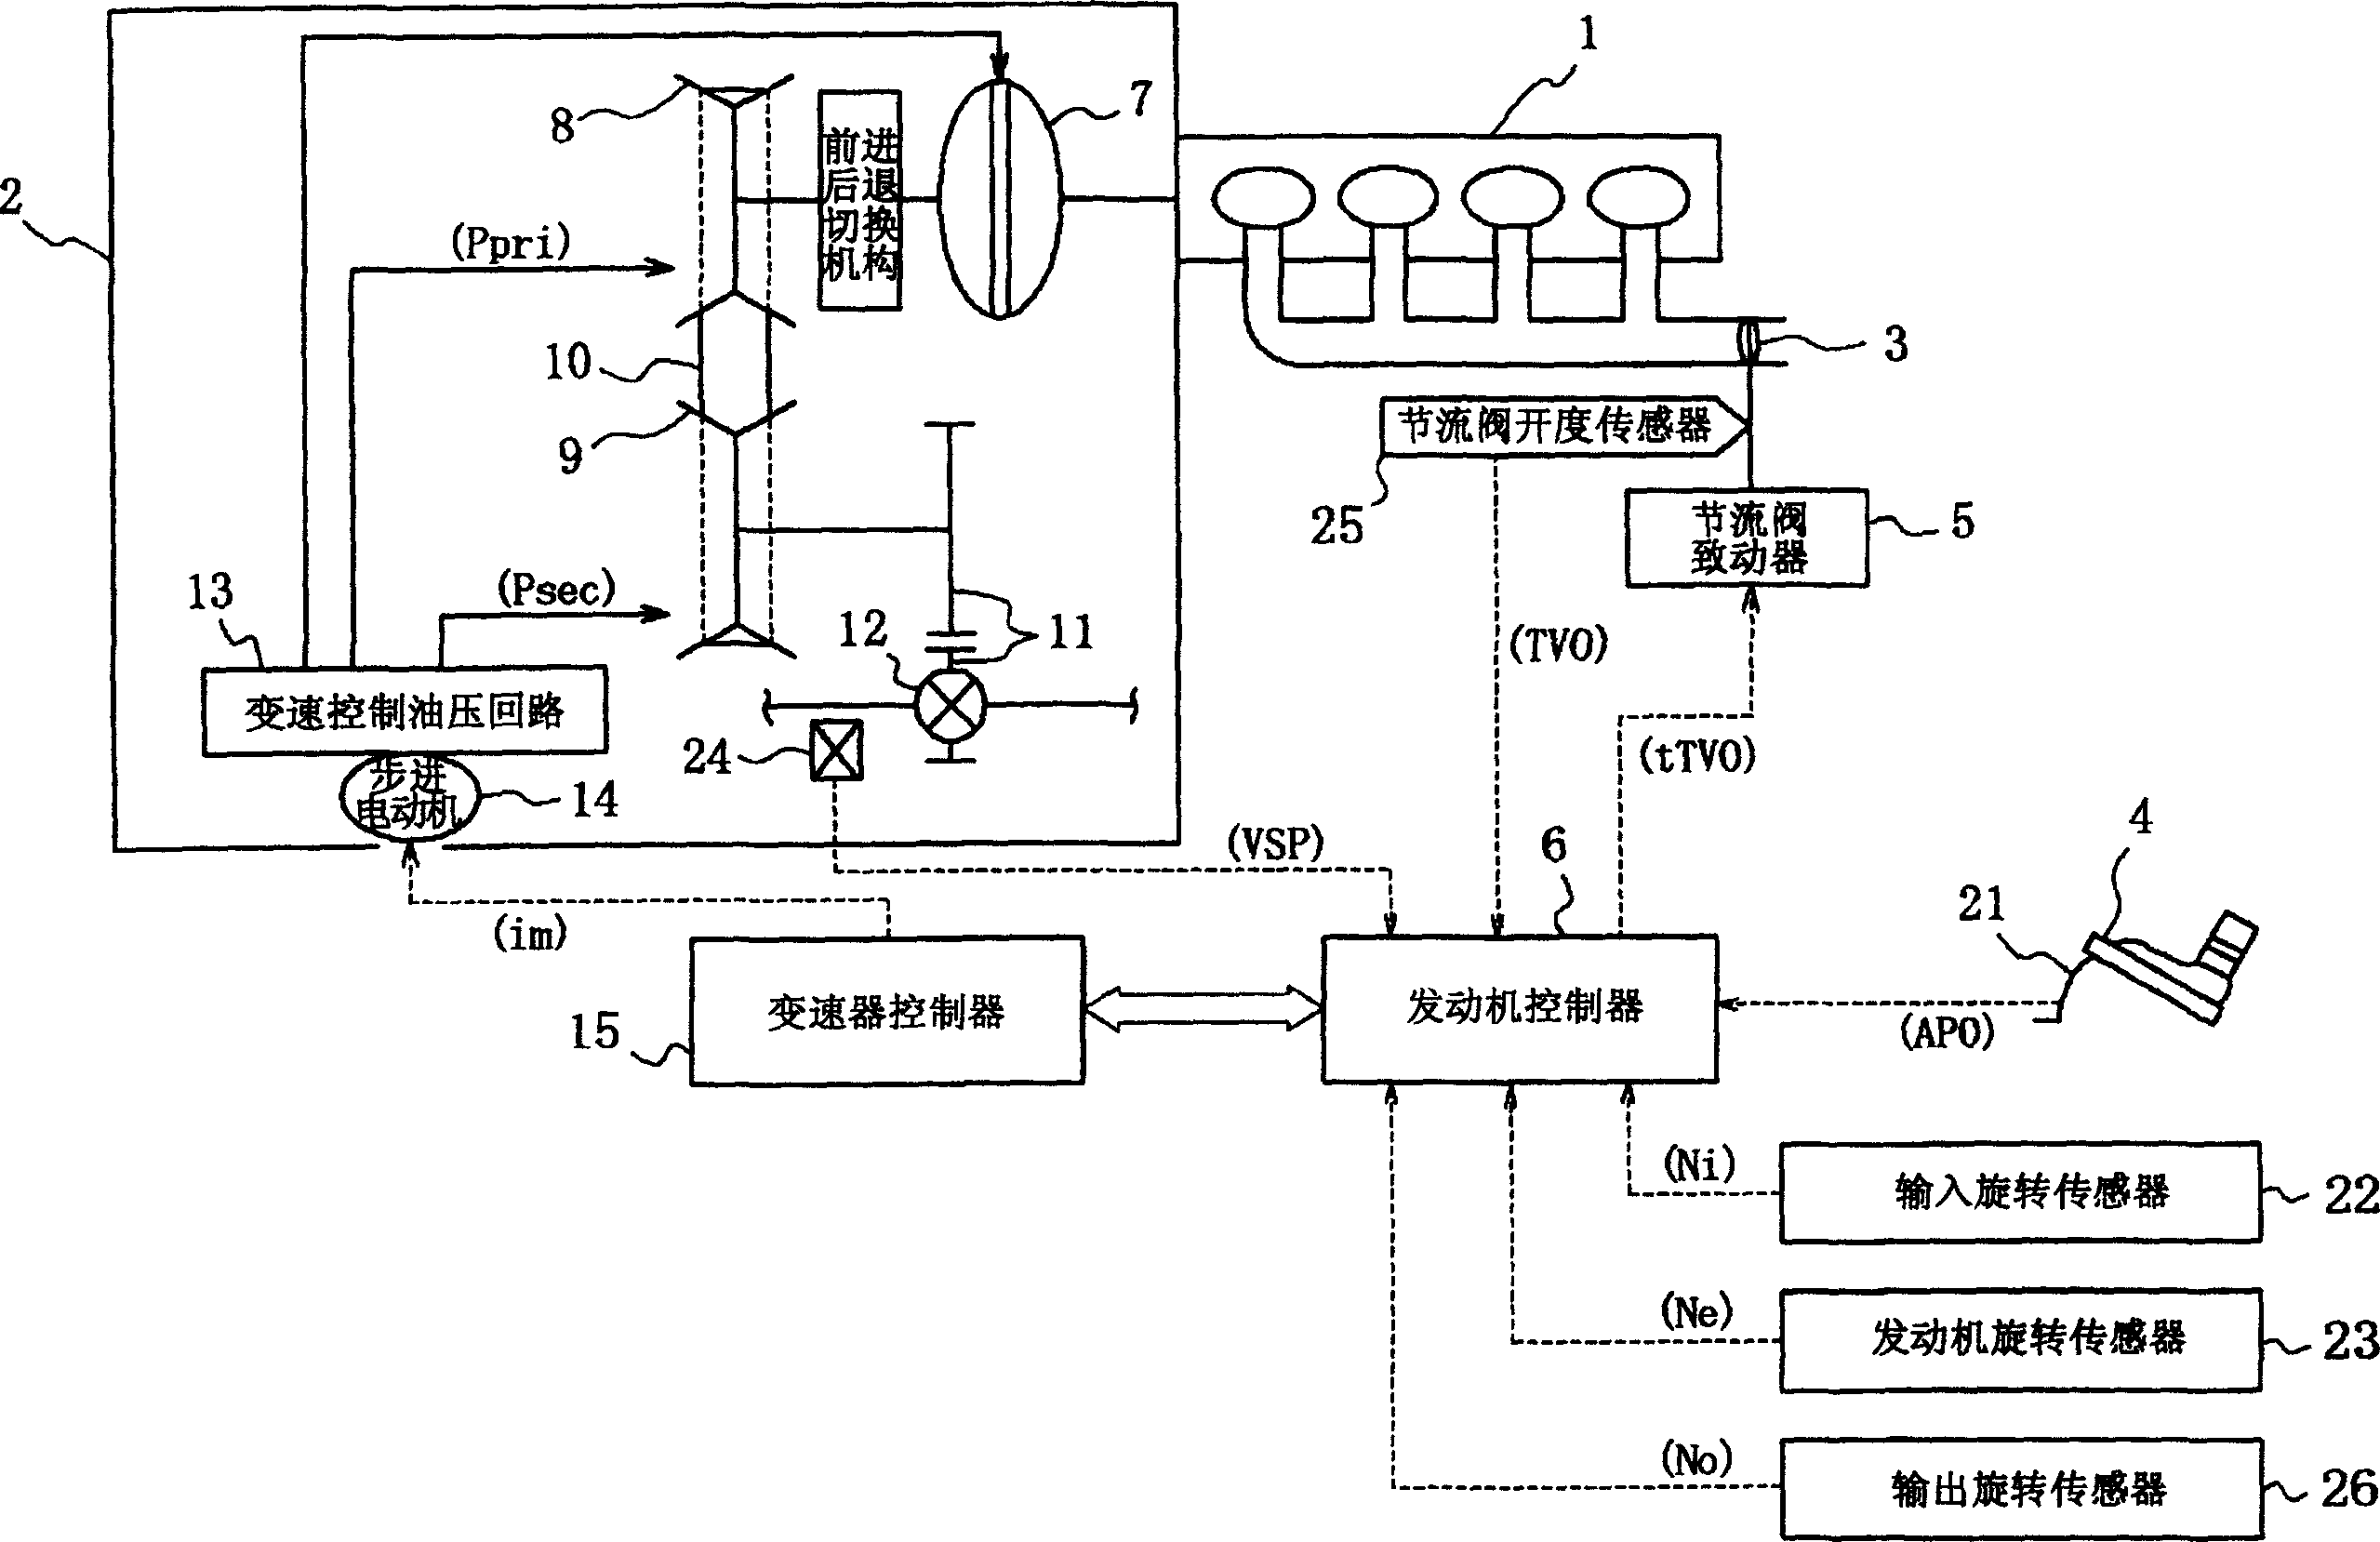 Engine output control device